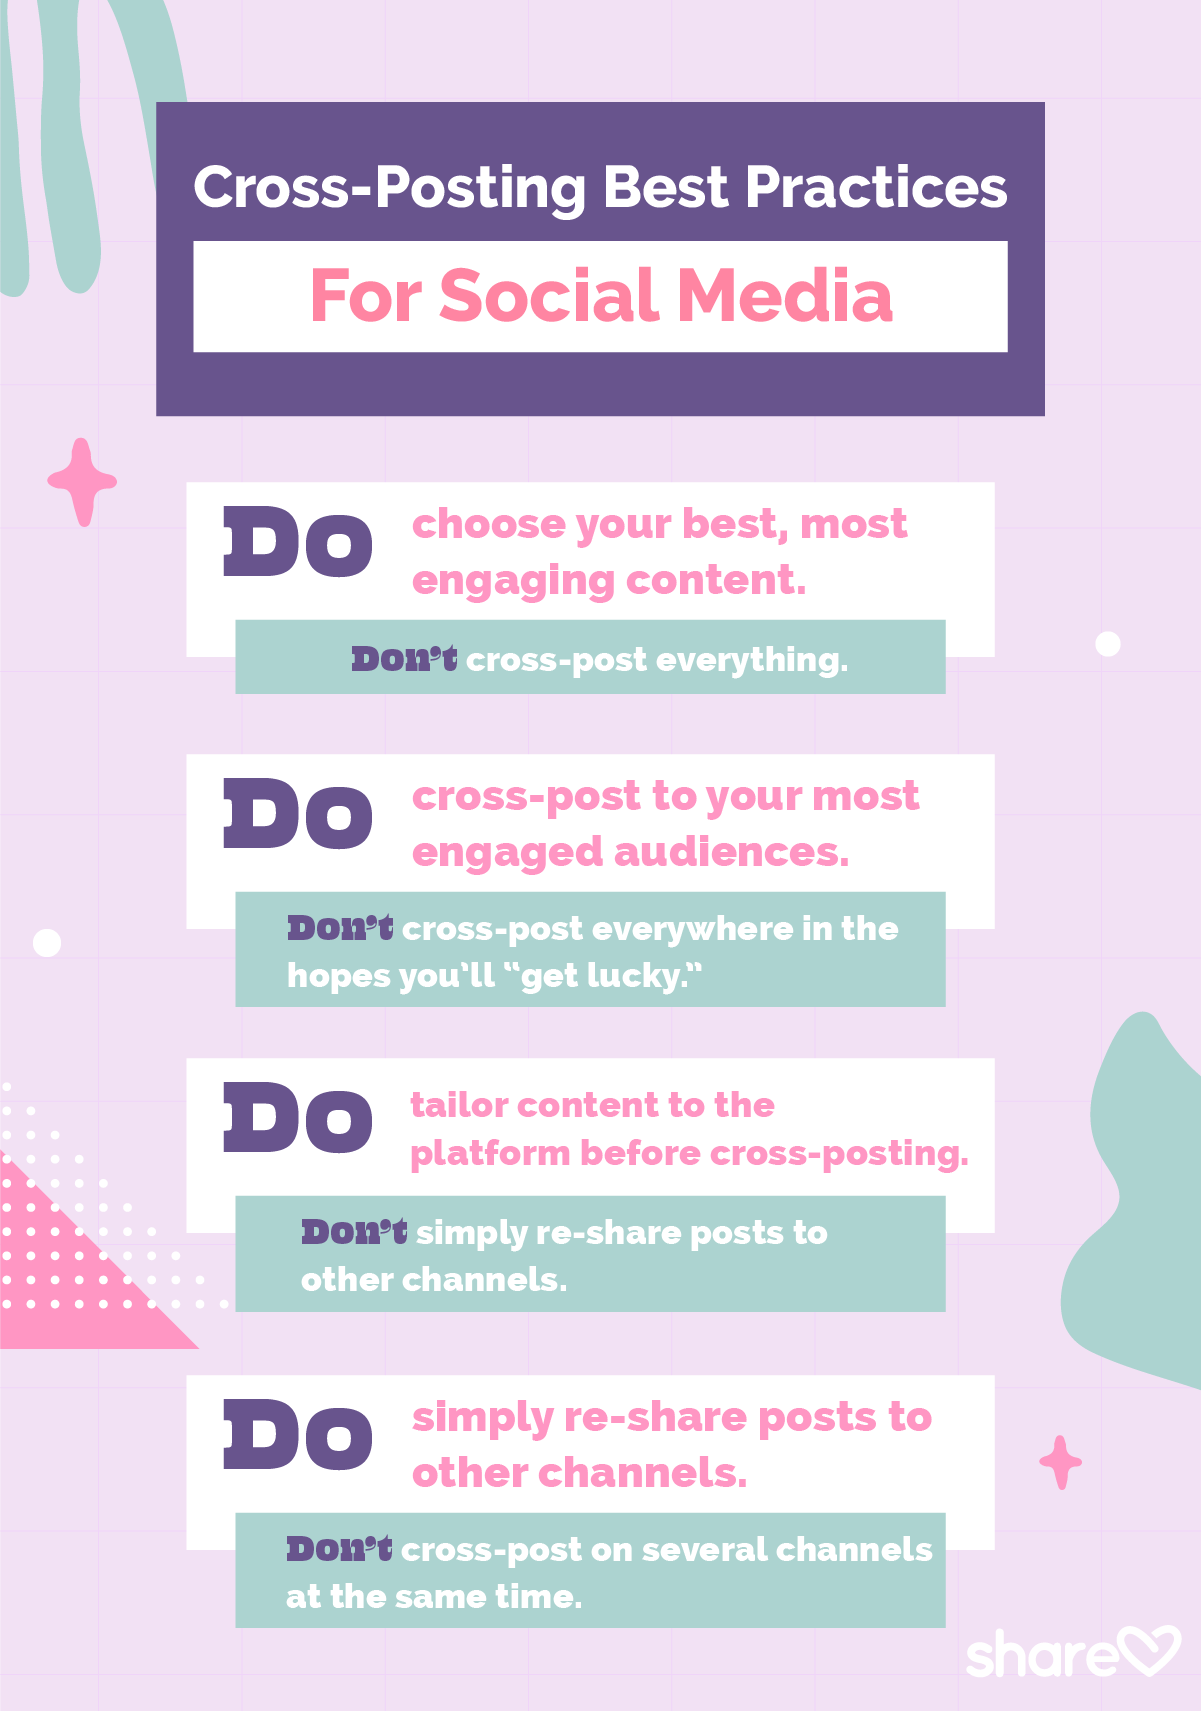 Cross-Posting Best Practices For Social Media